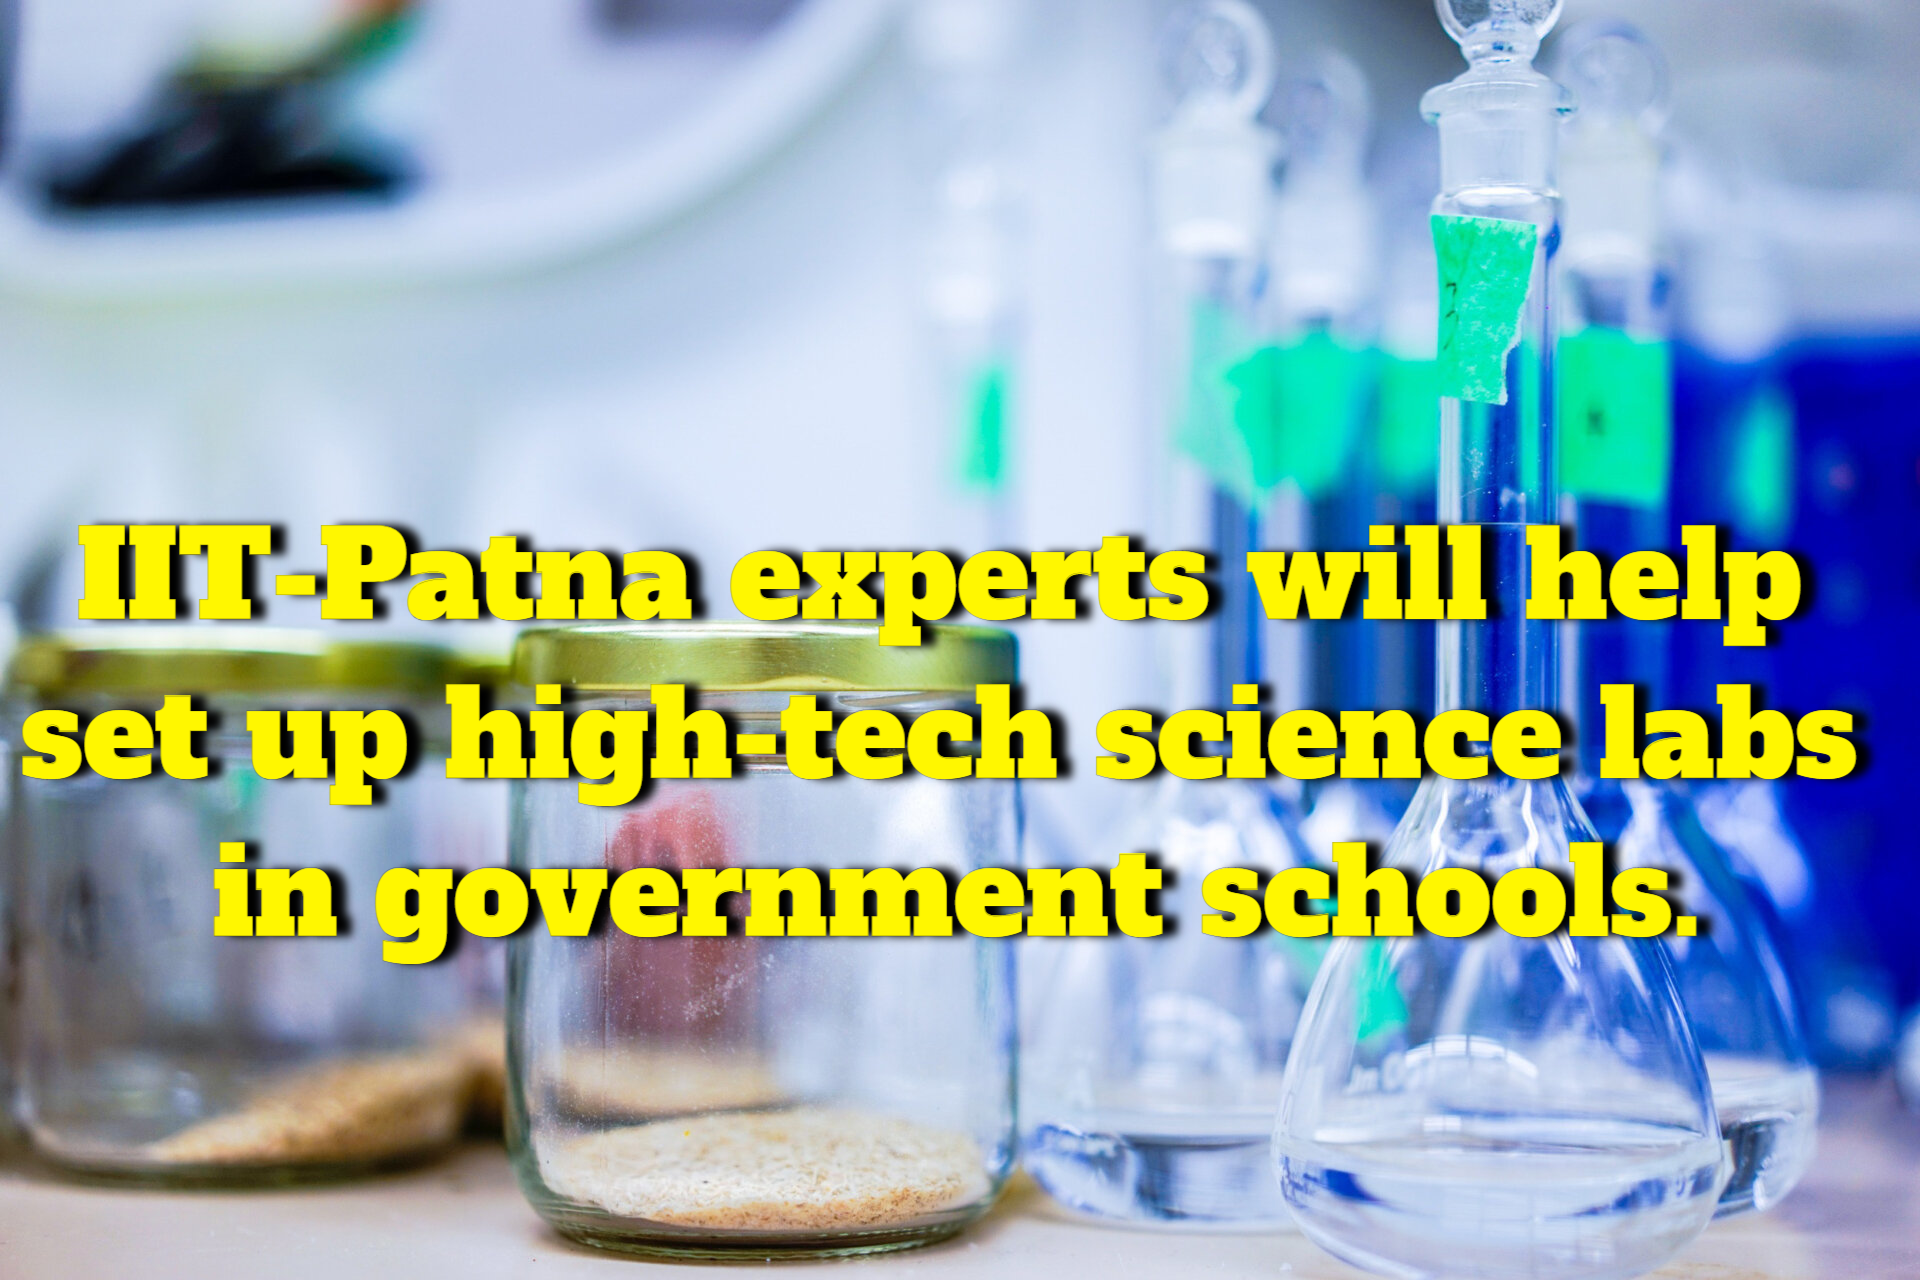 IIT-Patna experts will help in the establishment of high-tech science labs in govt schools